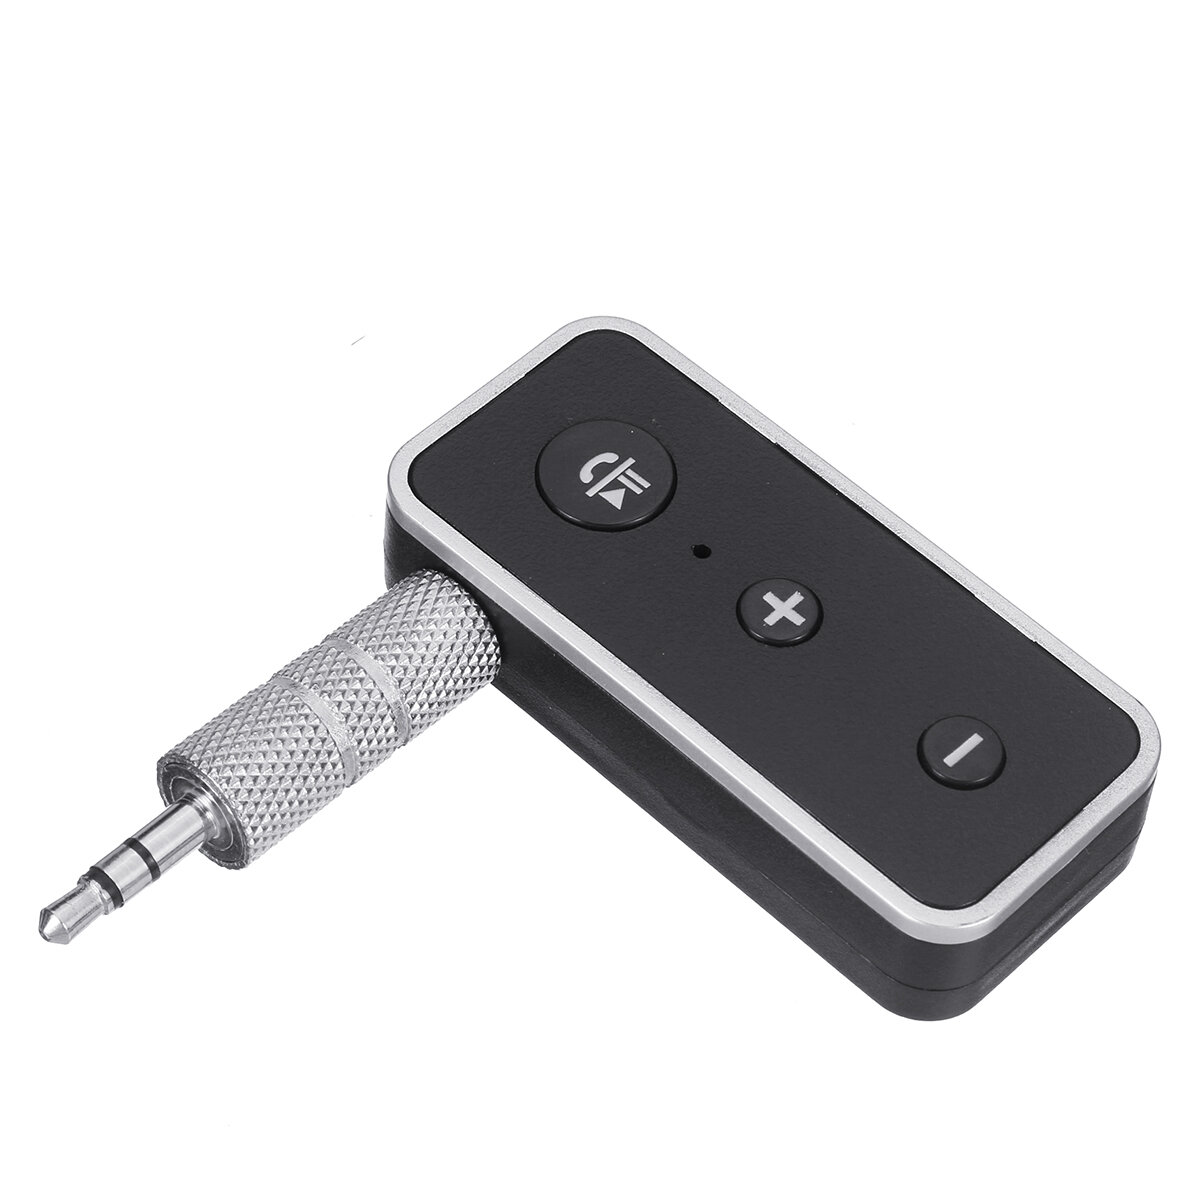 BT510 Car bluetooth 5.0 Audio Receiver EDR 3.5mm AUX 300mAh Li Battery Built-in Microphone Hands-free Call